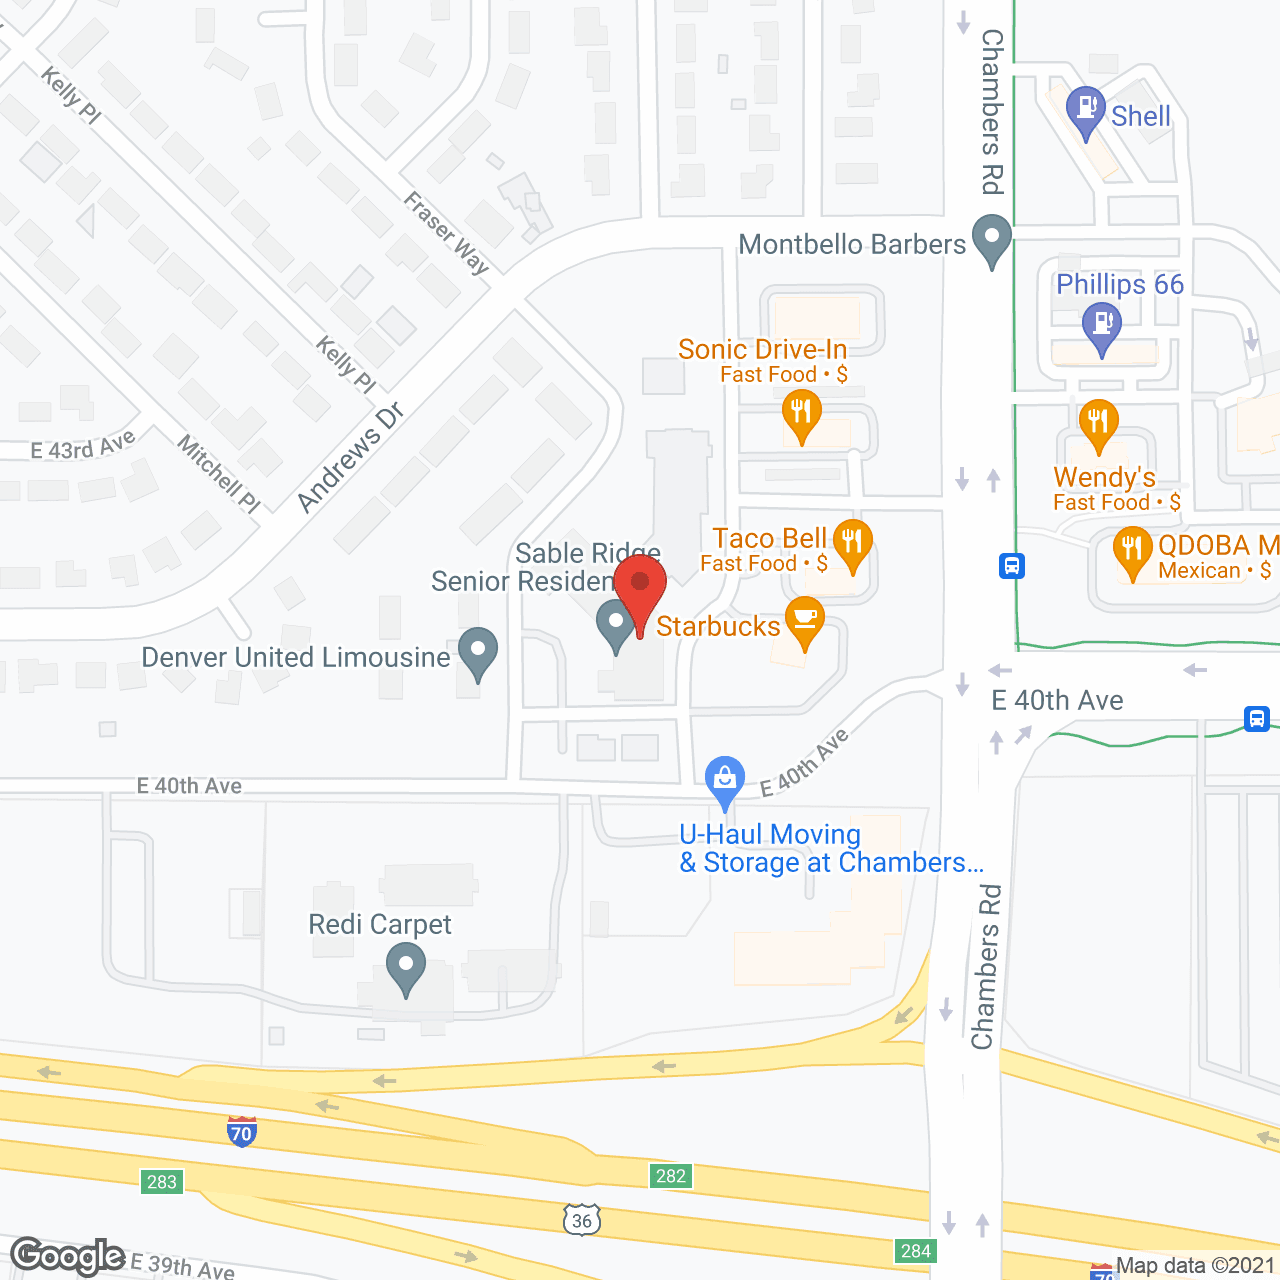 Sable Ridge Apartments in google map